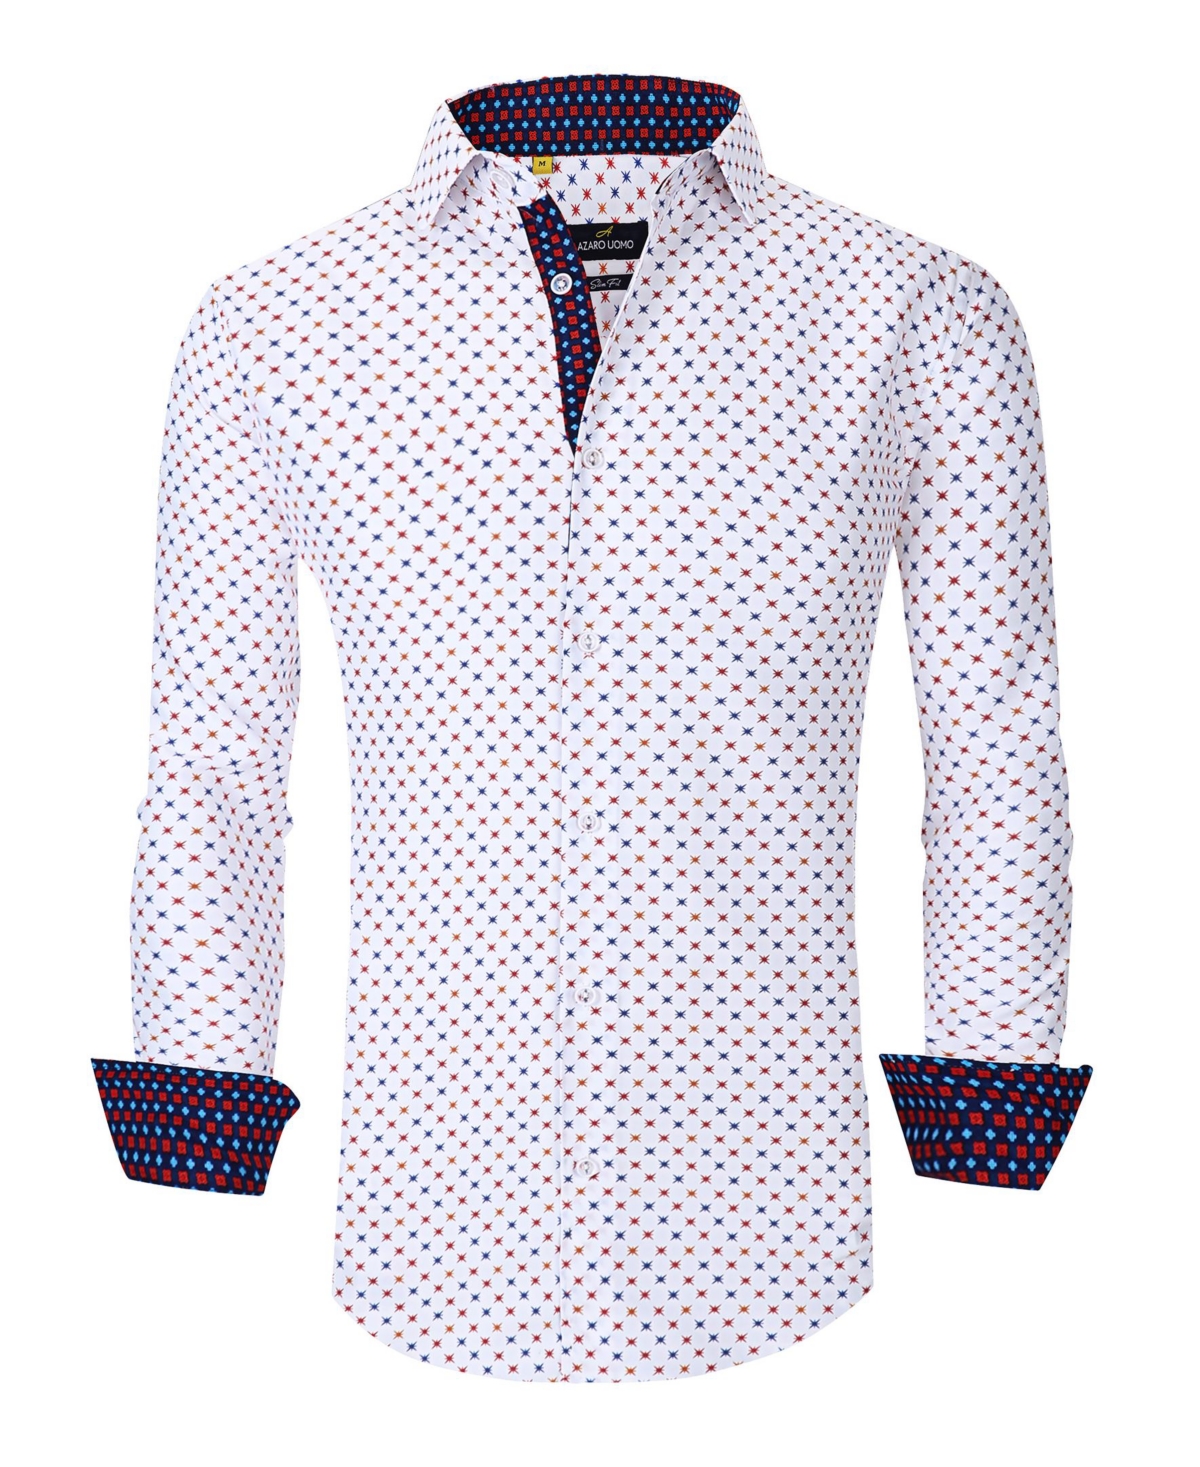 Men's Slim Fit Business Nautical Button Down Dress Shirt - White